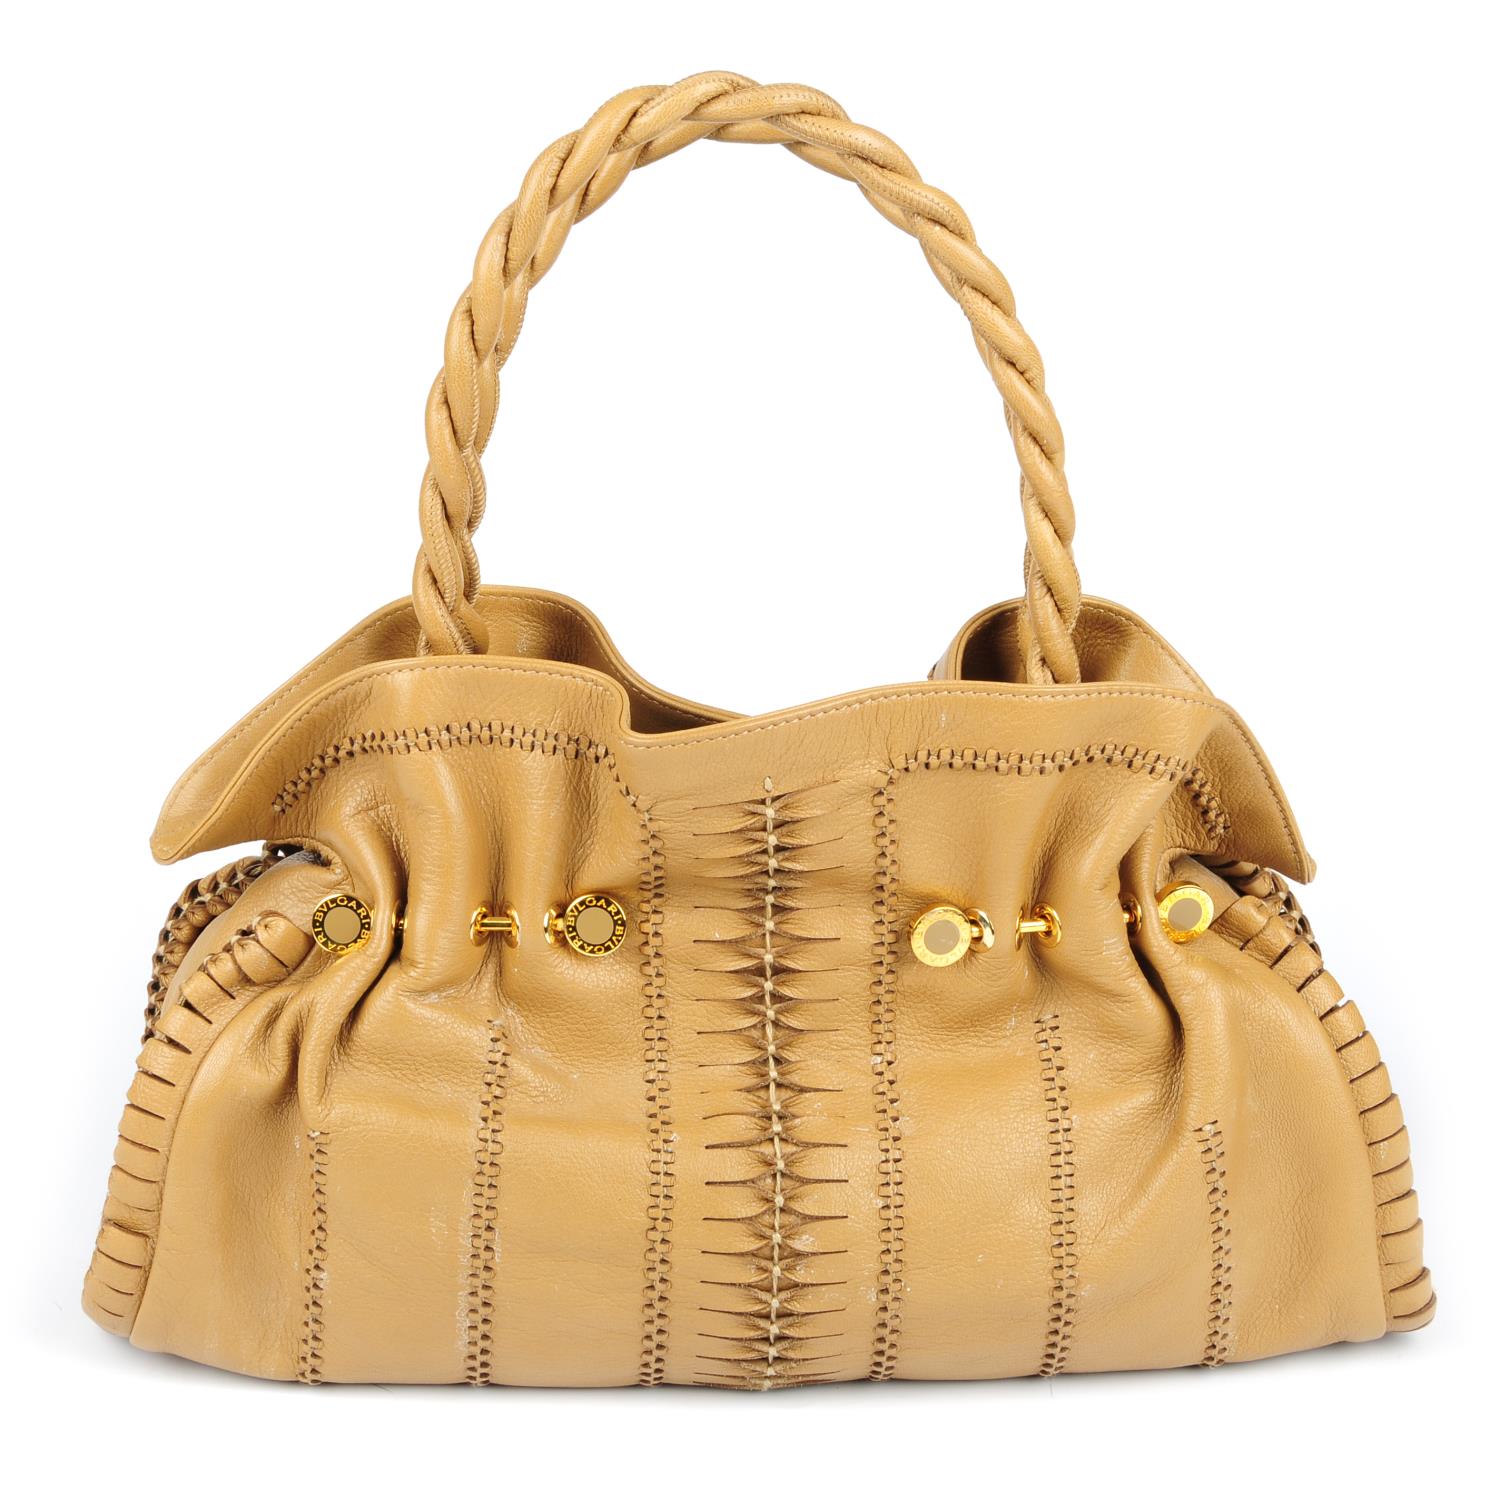 BULGARI - a ruched leather handbag. - Image 2 of 3